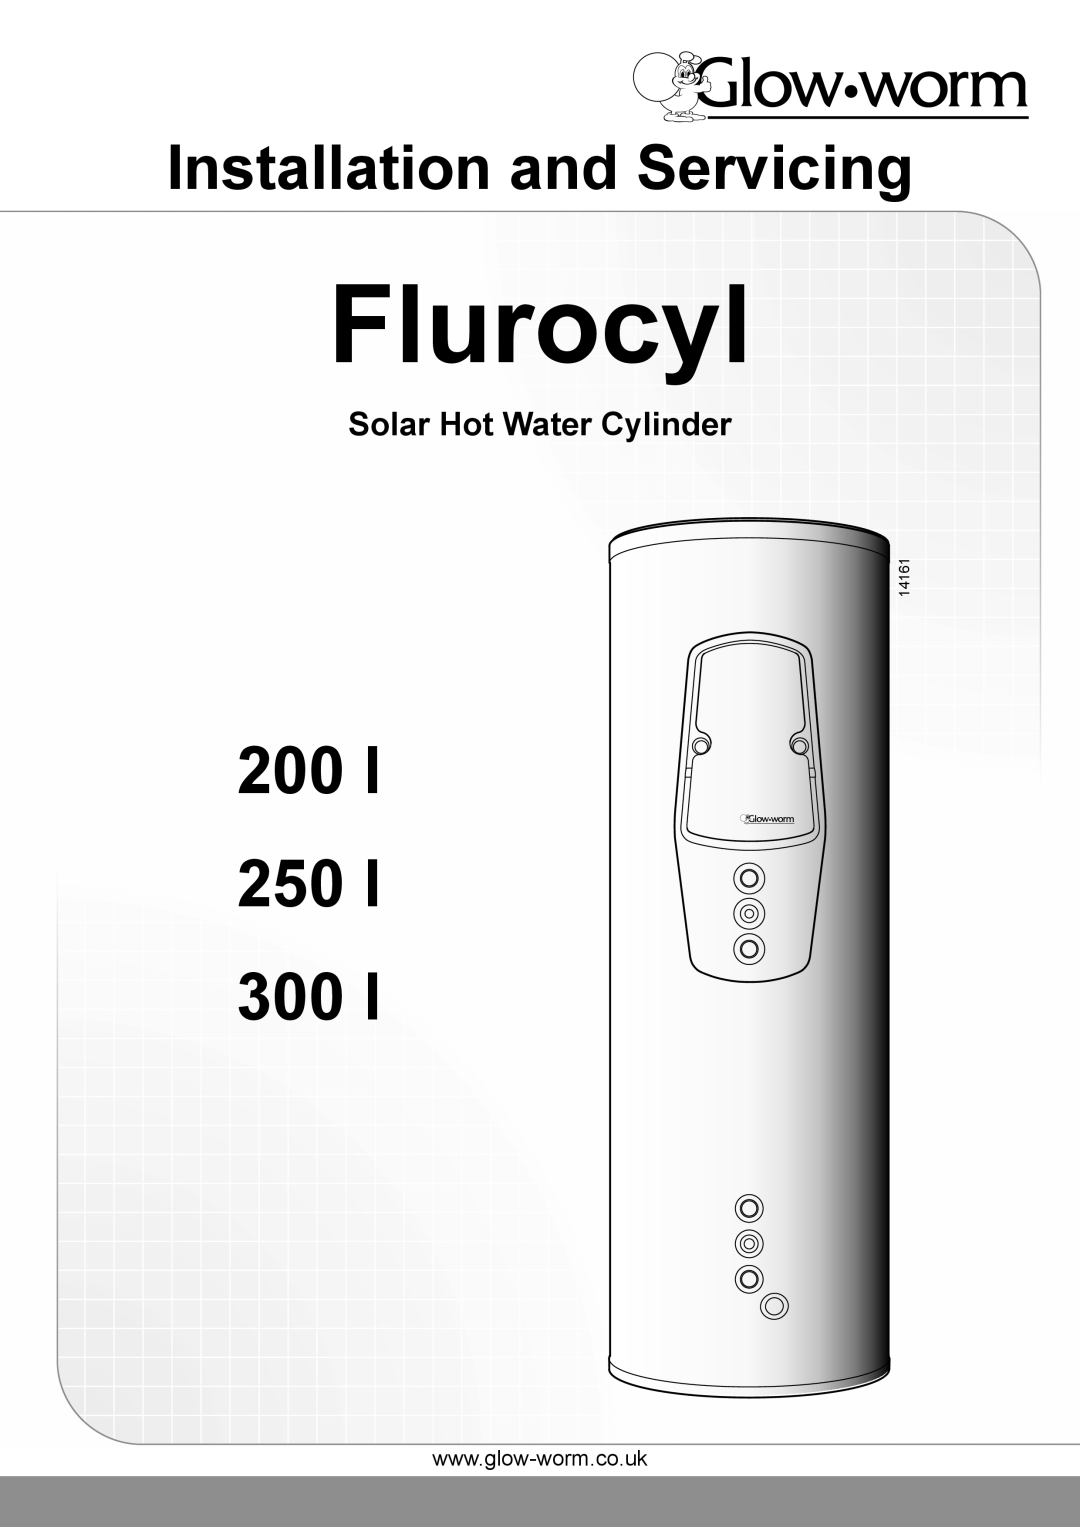 Glowworm Lighting 300 I, 250 I, 200 I manual Solar Hot Water Cylinder, Flurocyl, 200l 250l 300l, Installation and Servicing 